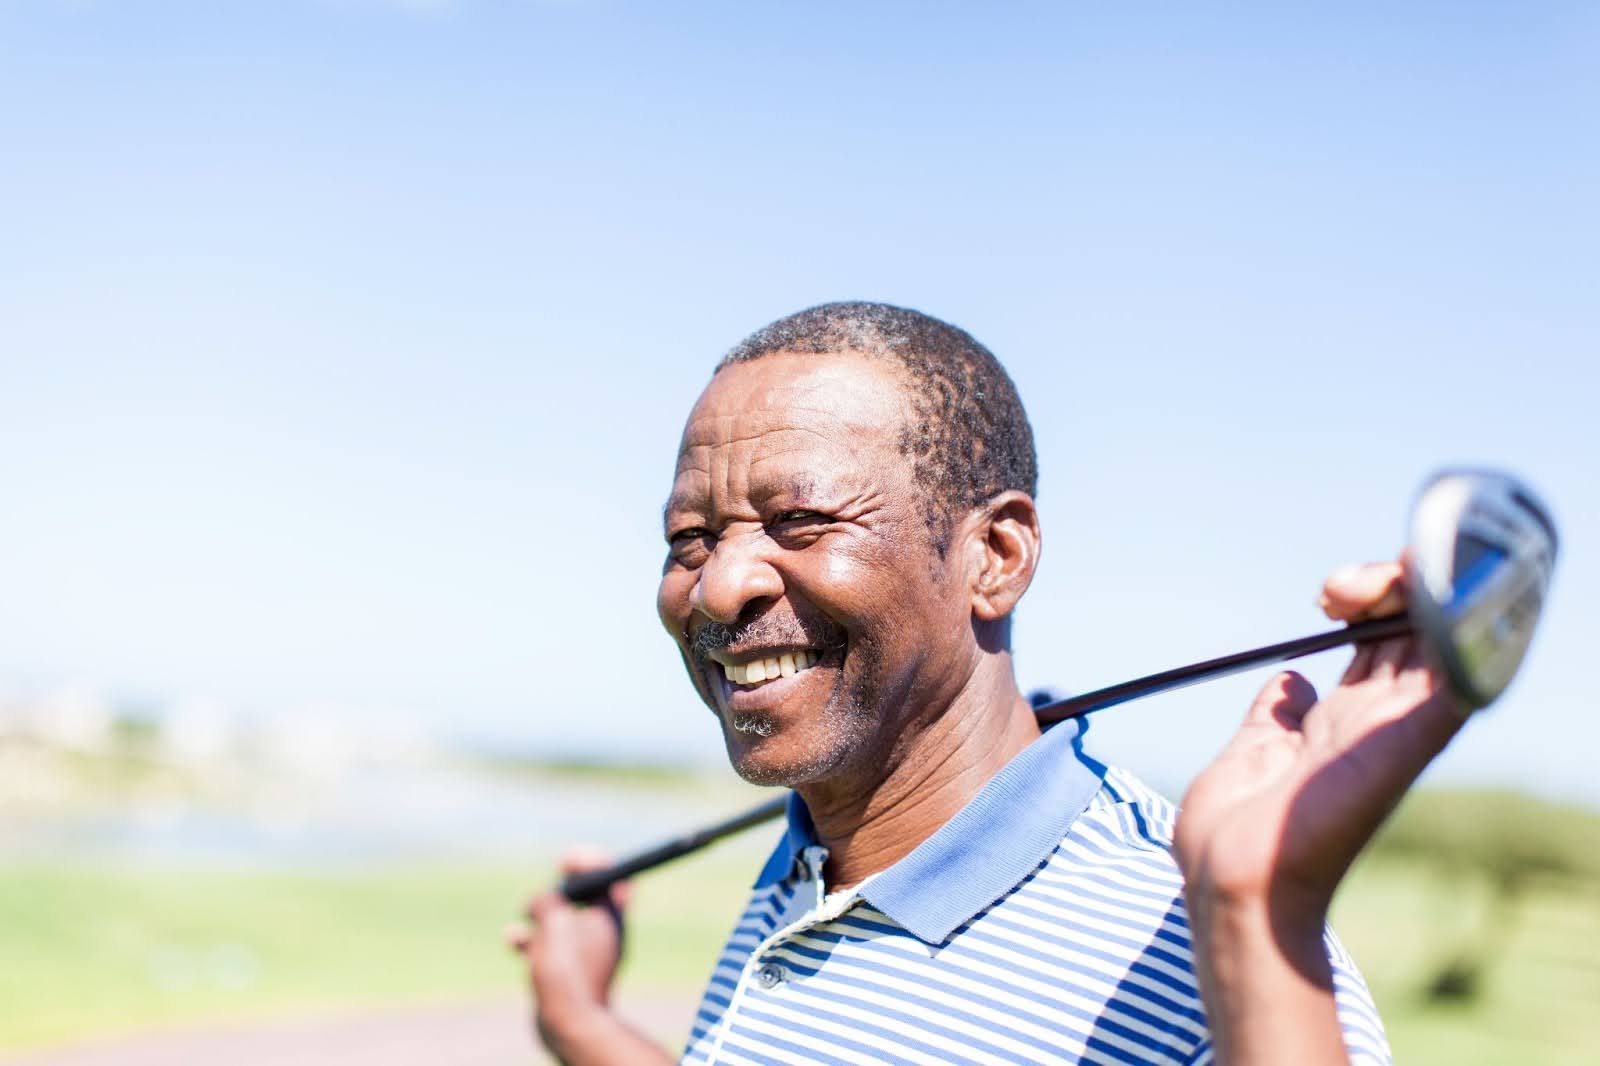 Senior man enjoying a day on the golf course